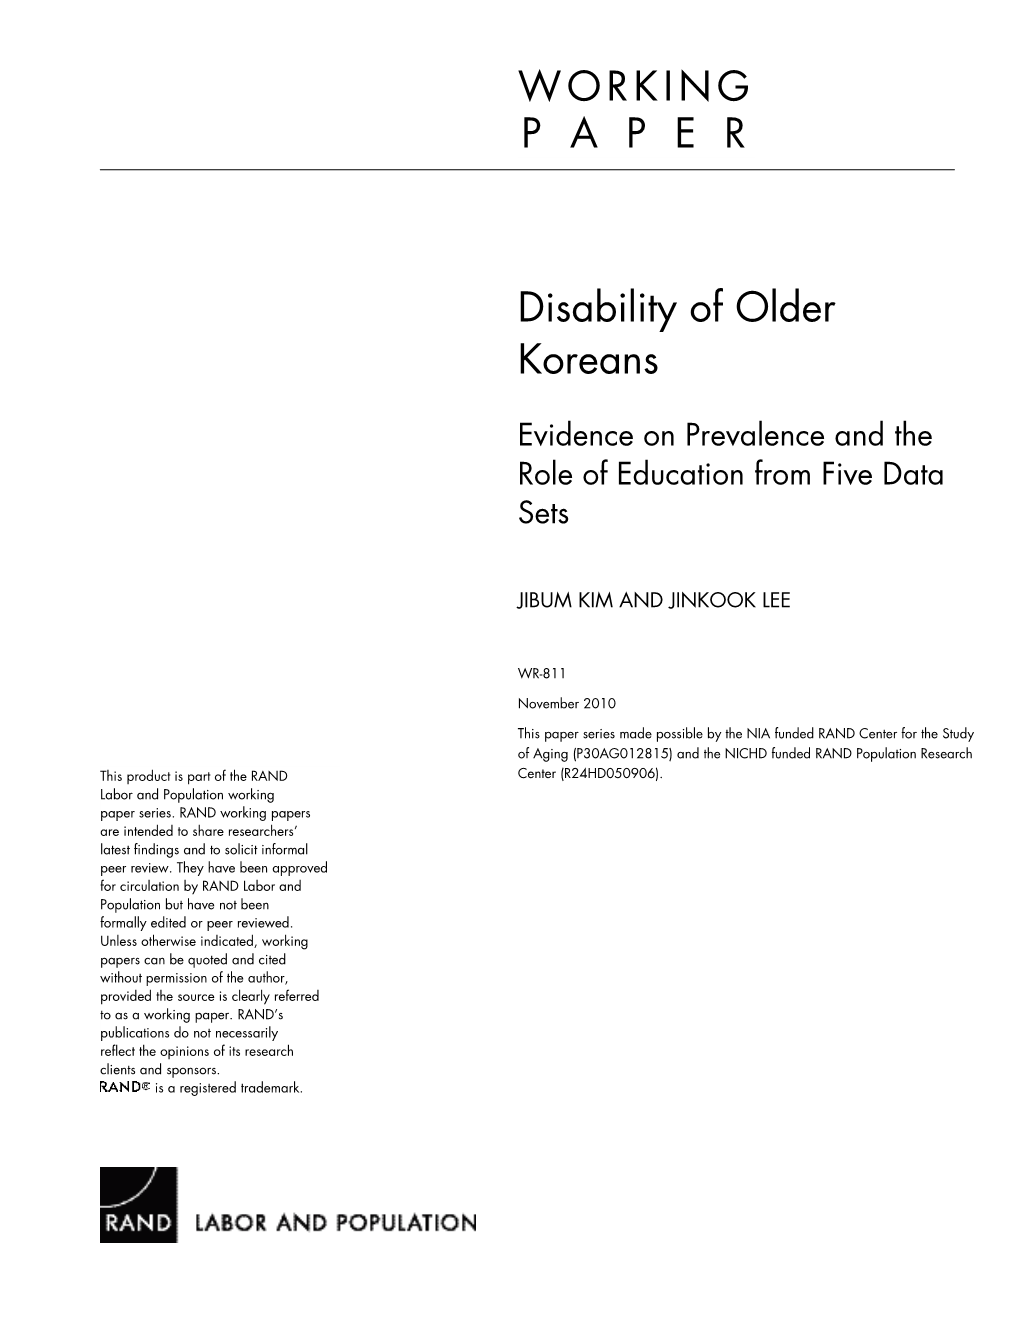 Disability of Older Koreans